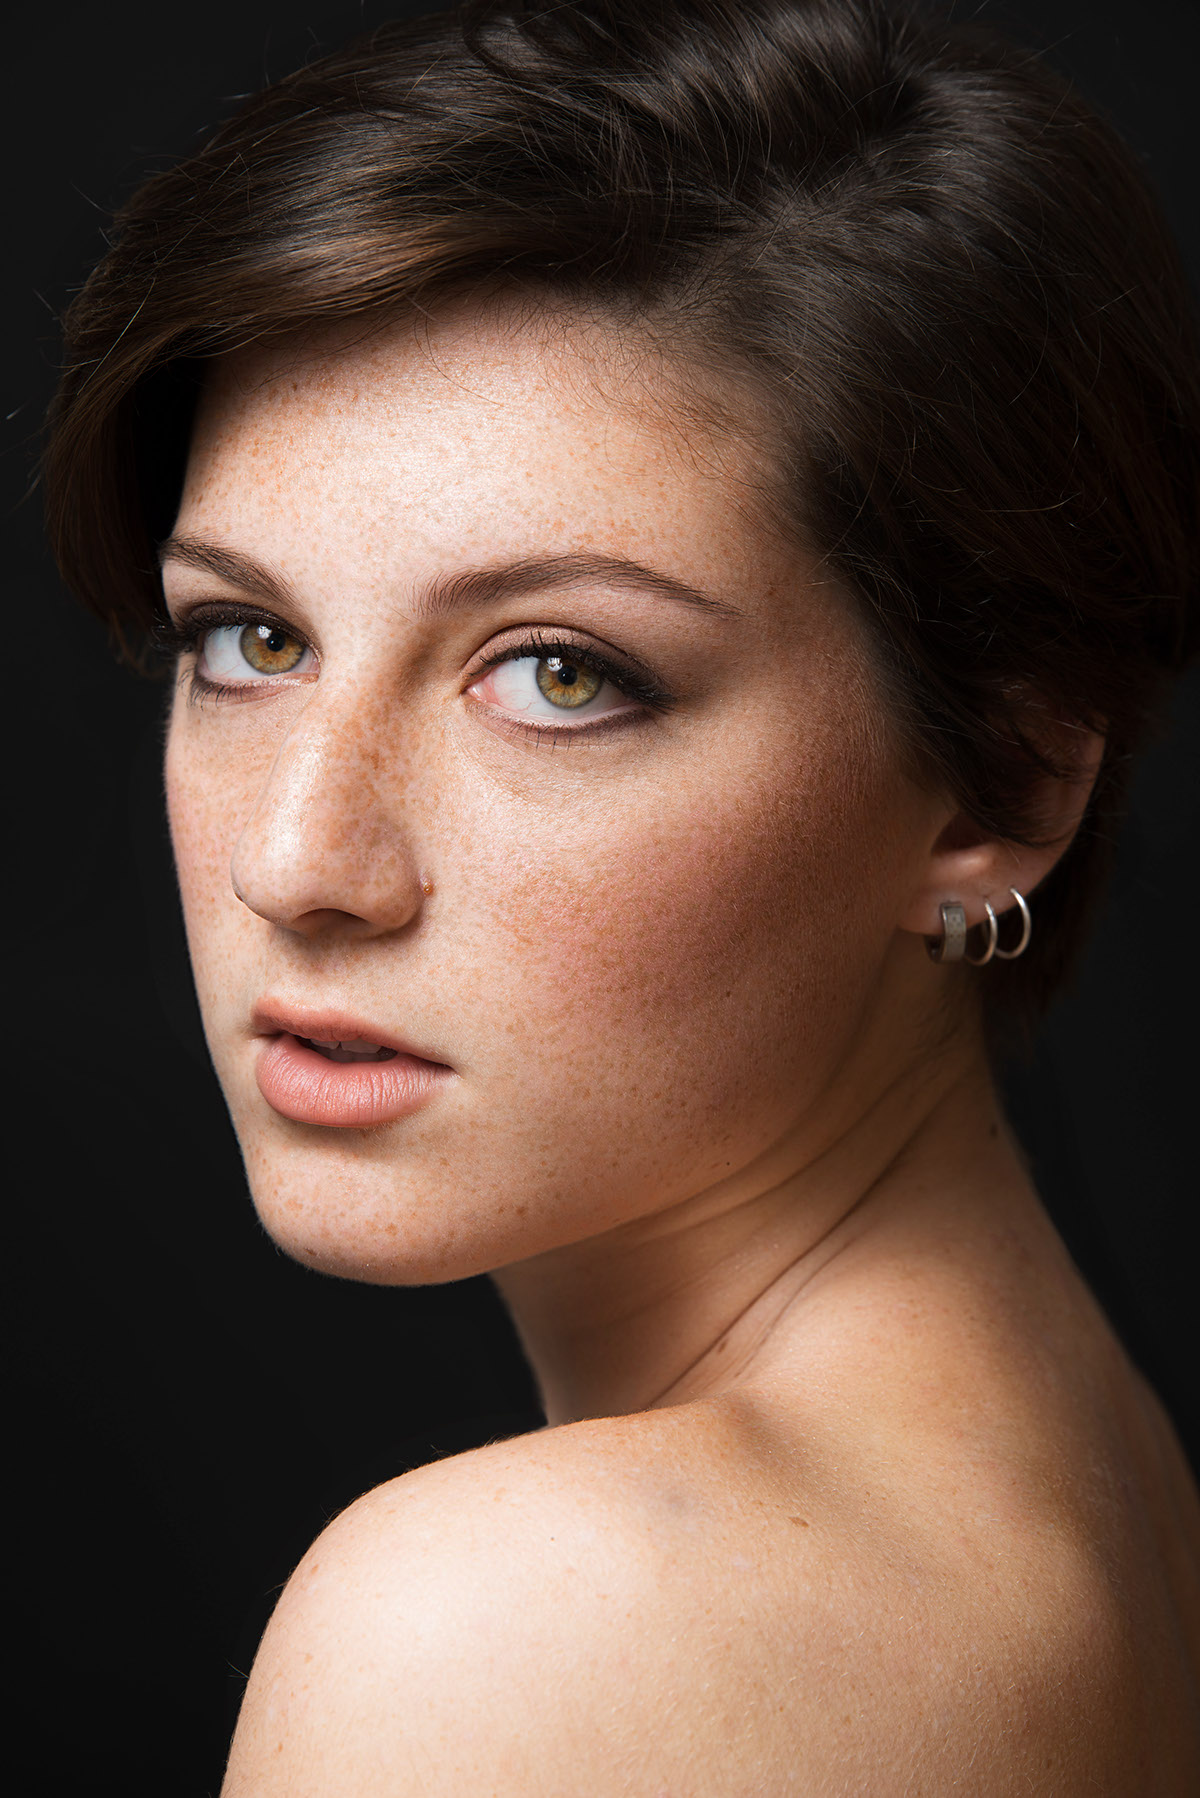 girl model natural skin freckles redhead beauty Beautiful portrait light Make Up lips eyes studio